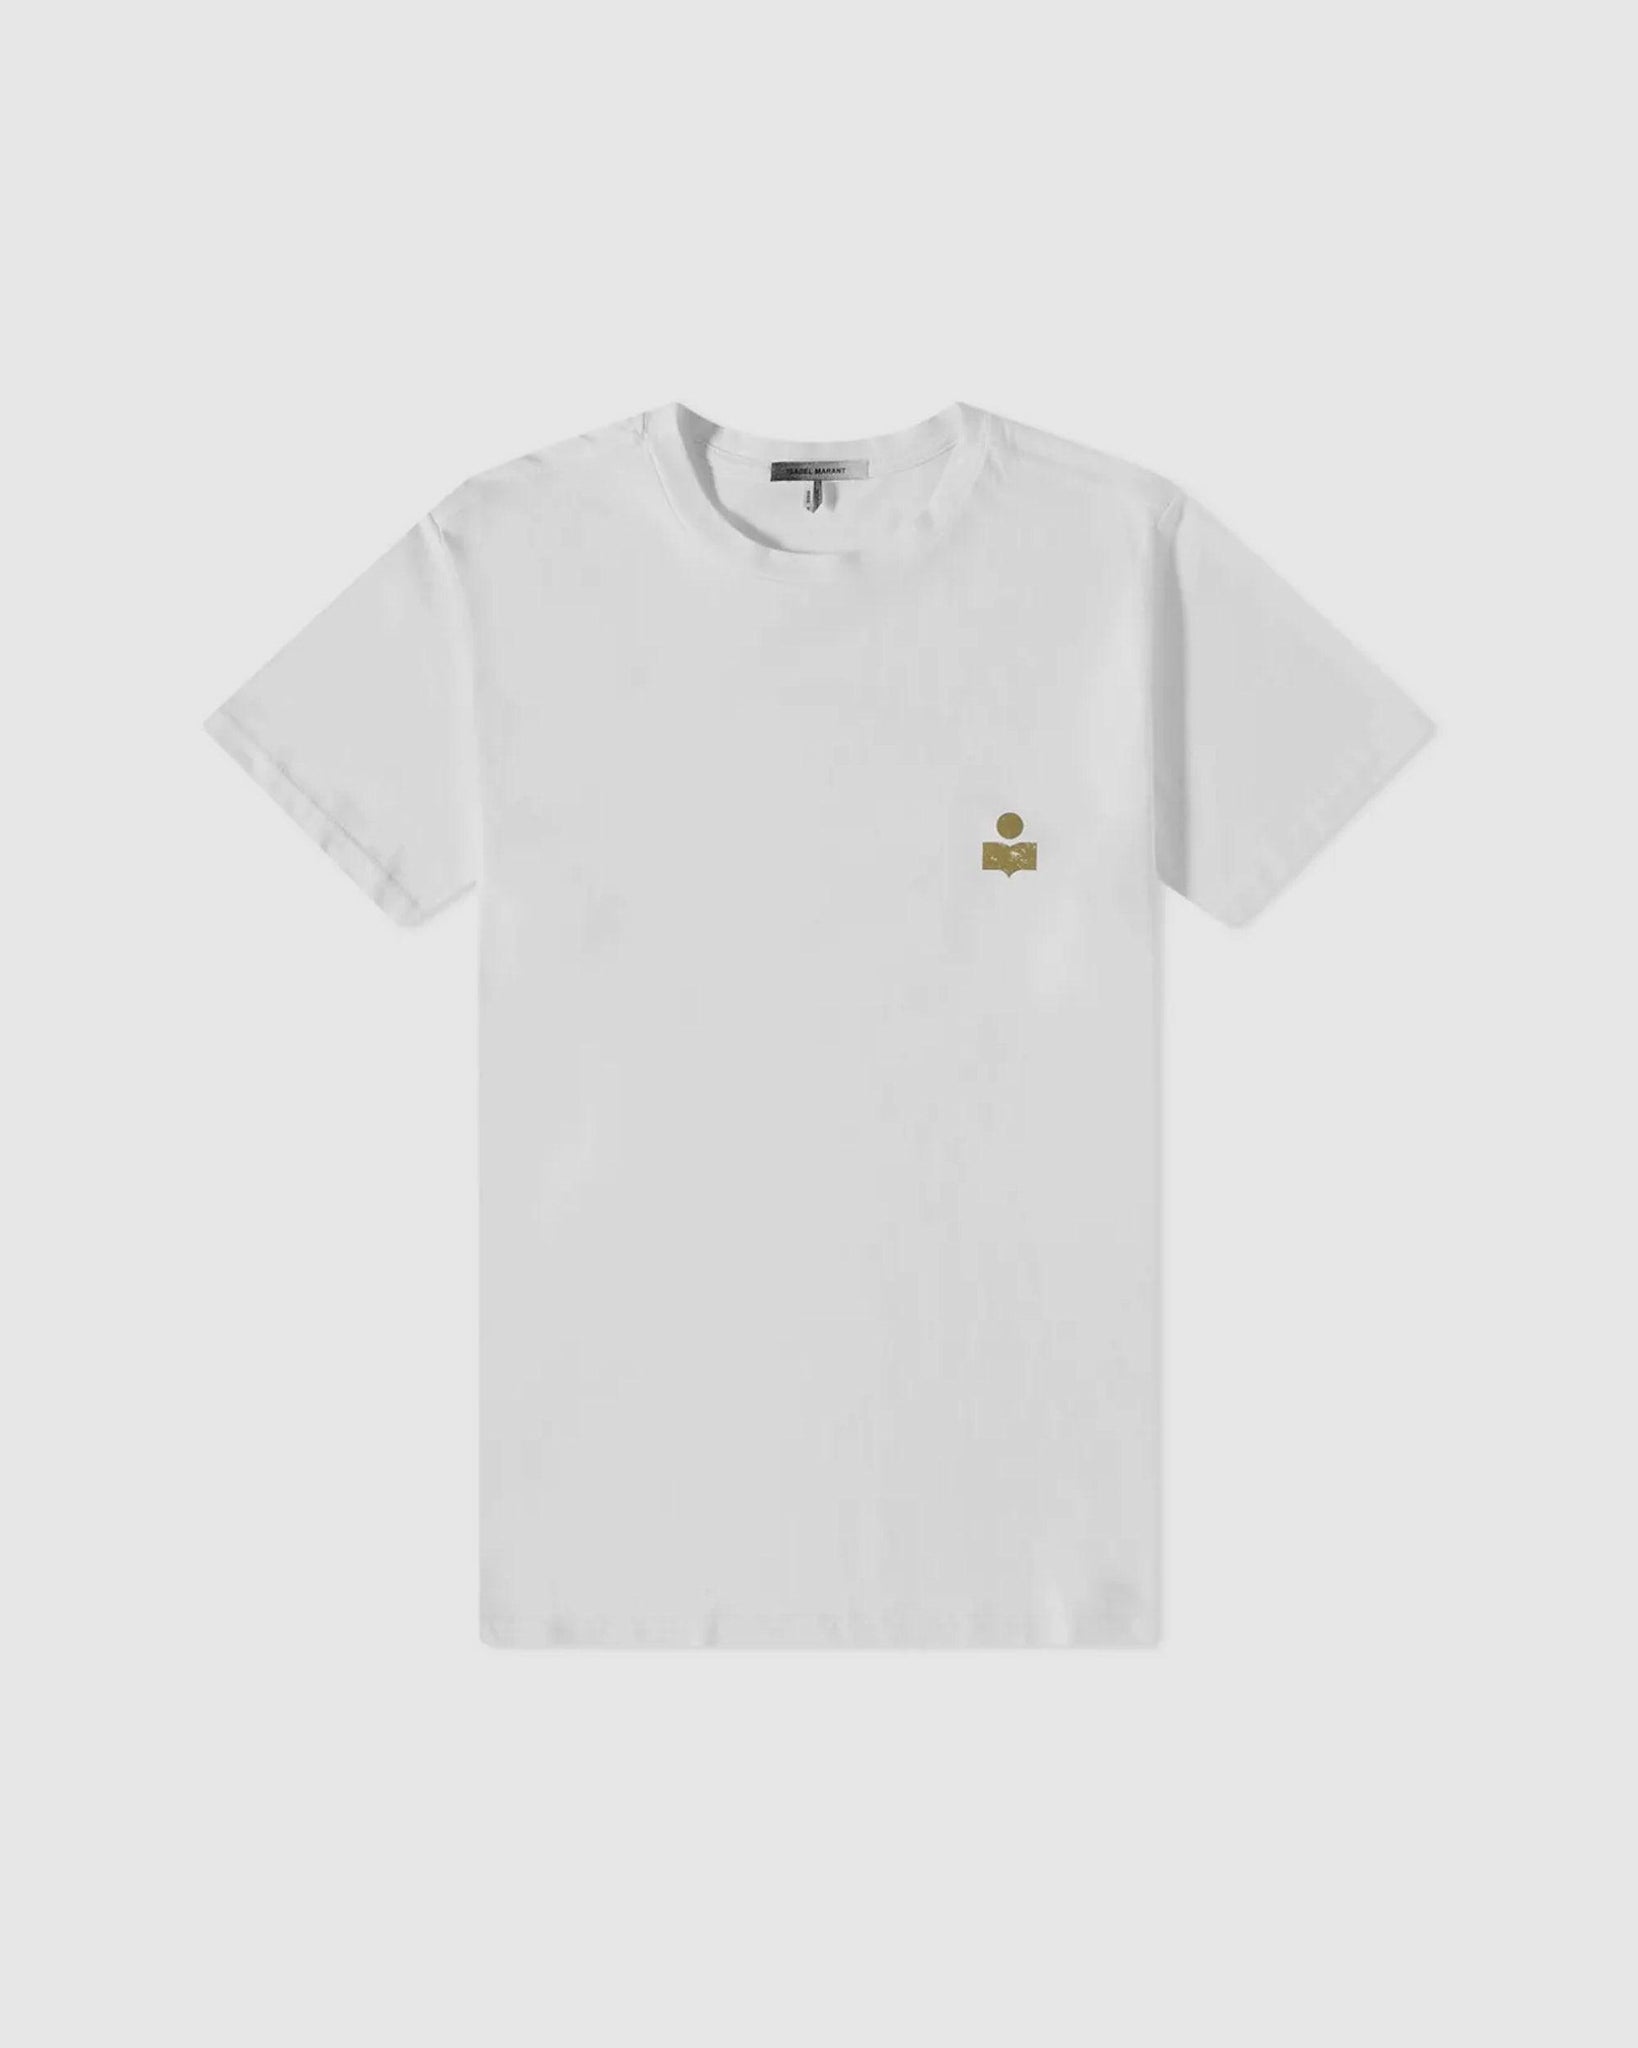 Zafferh T-Shirt Khaki/White - {{ collection.title }} - Chinatown Country Club 